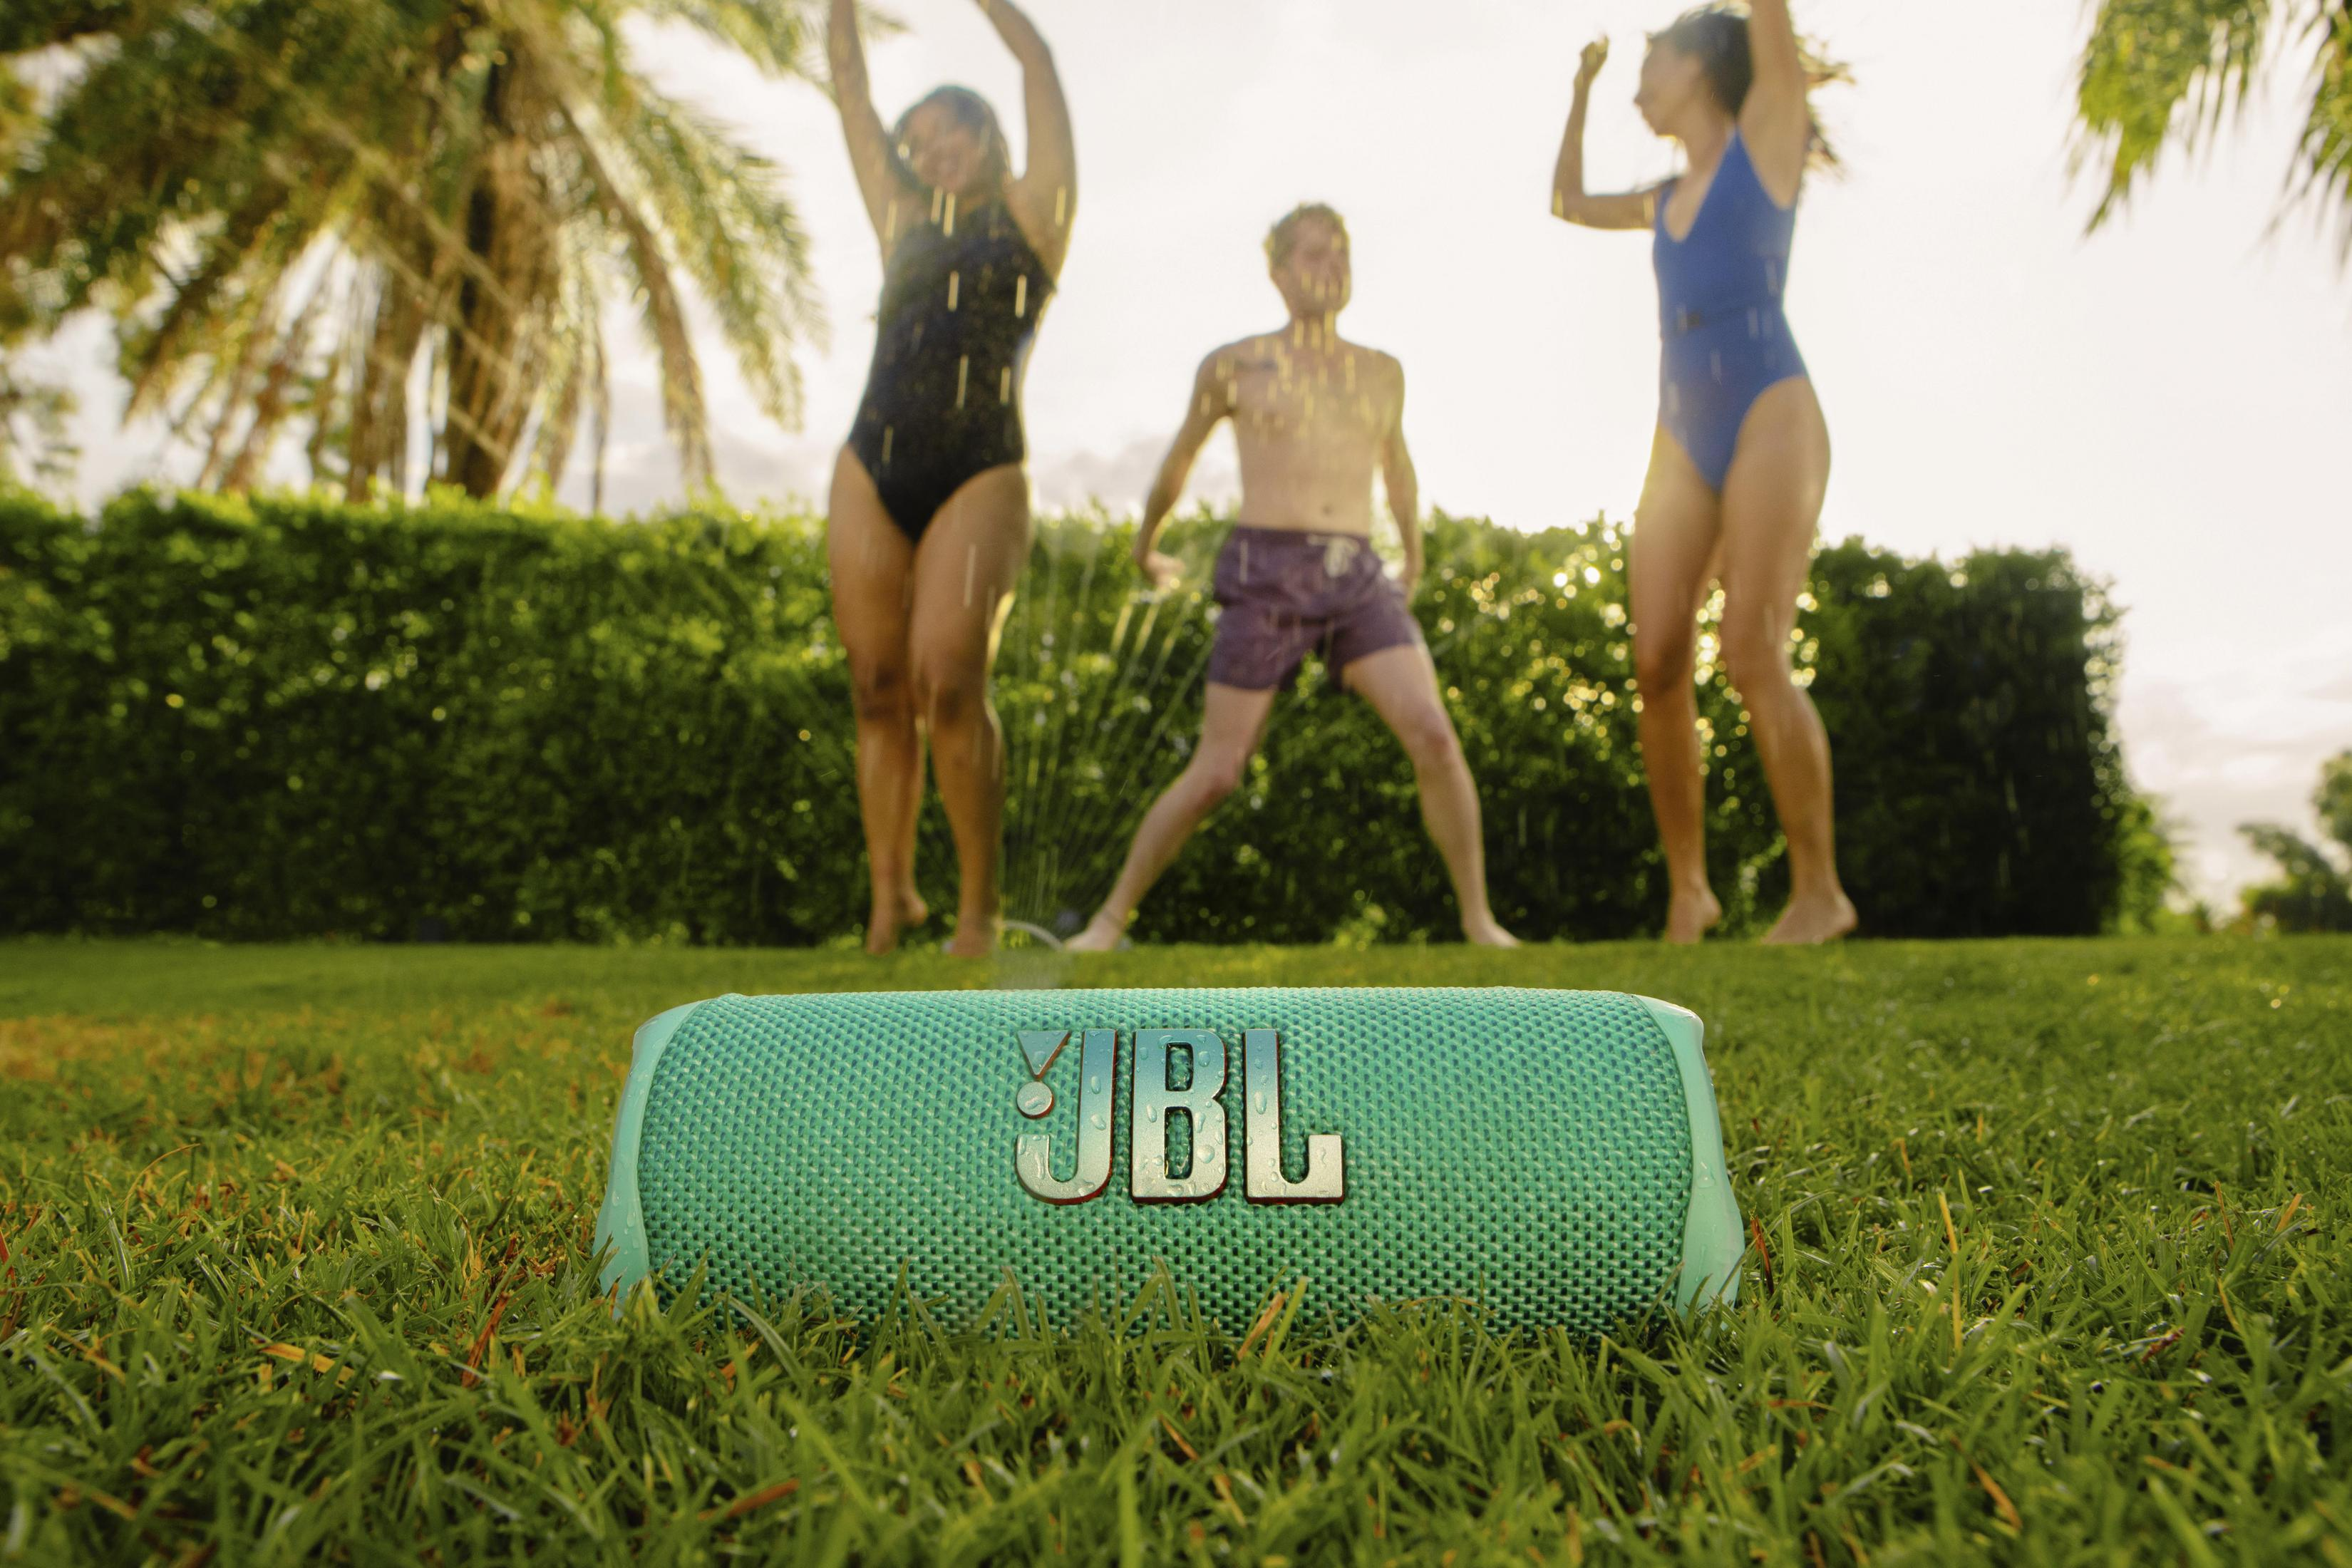 JBL FLIP Bluetooth Wasserfest Lautsprecher, Schwarz, 6 BLK